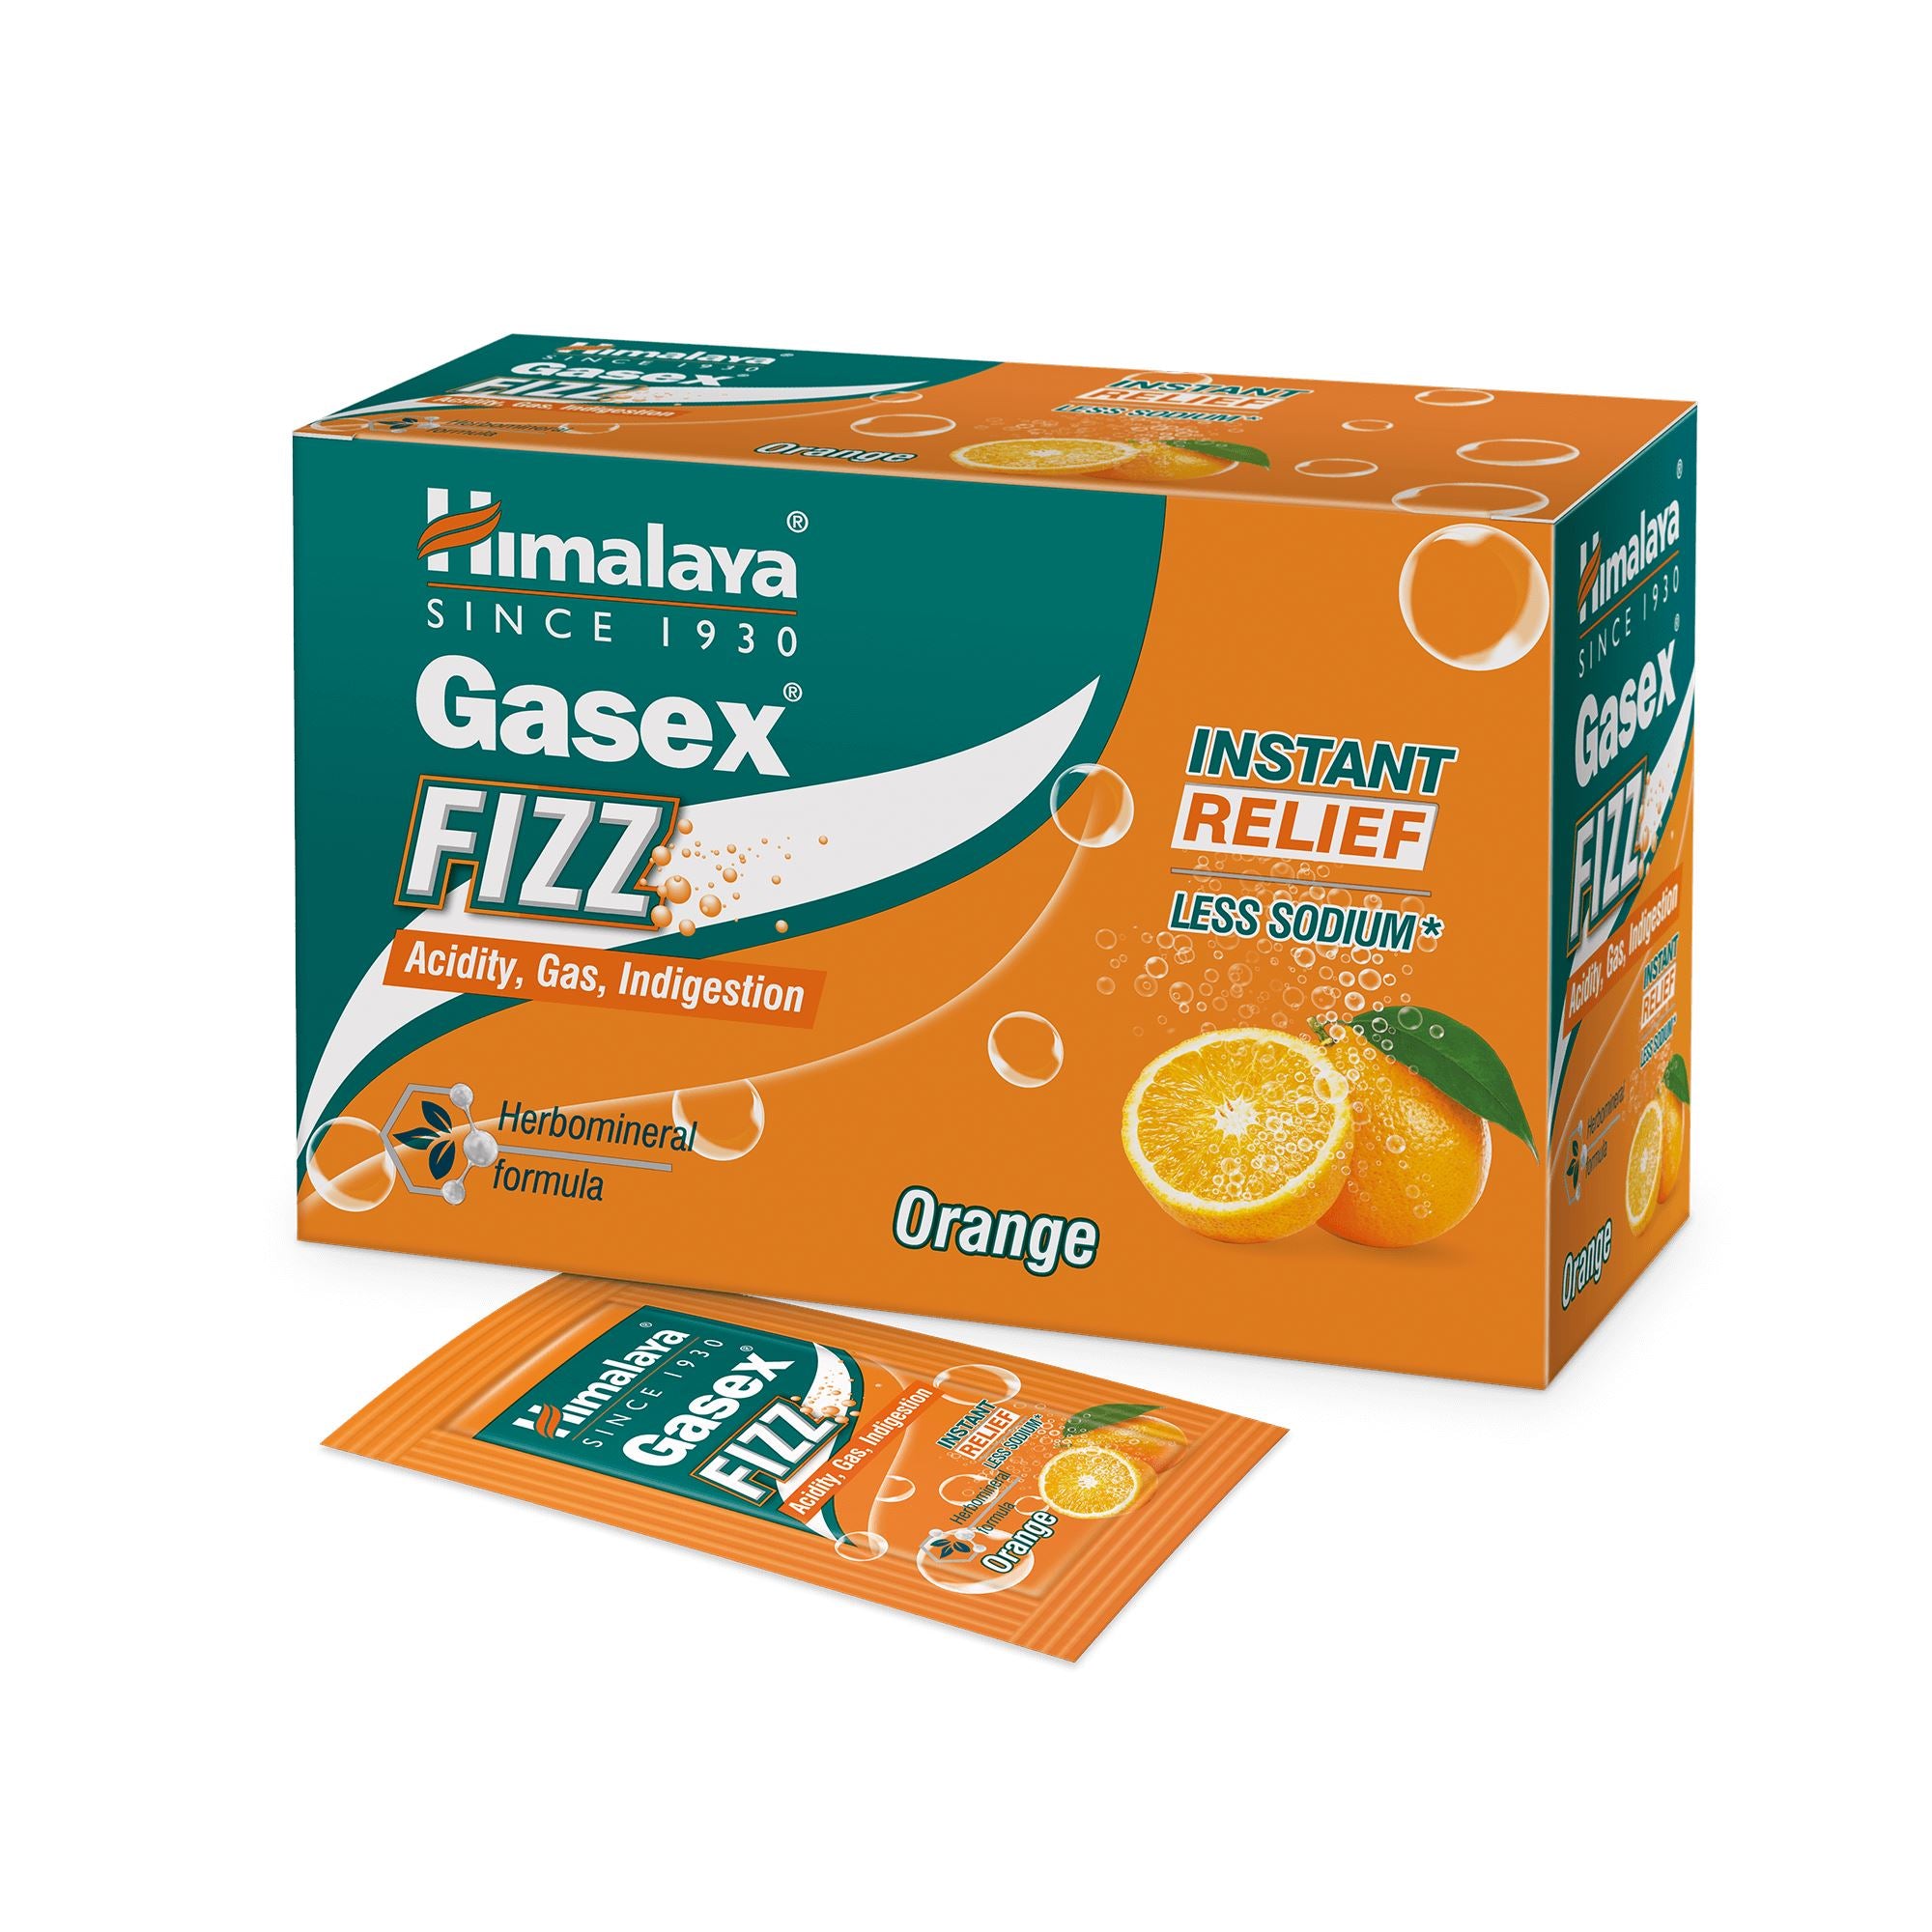 Himalaya Gasex Fizz (Orange) 10s - Instant Relief from Acidity